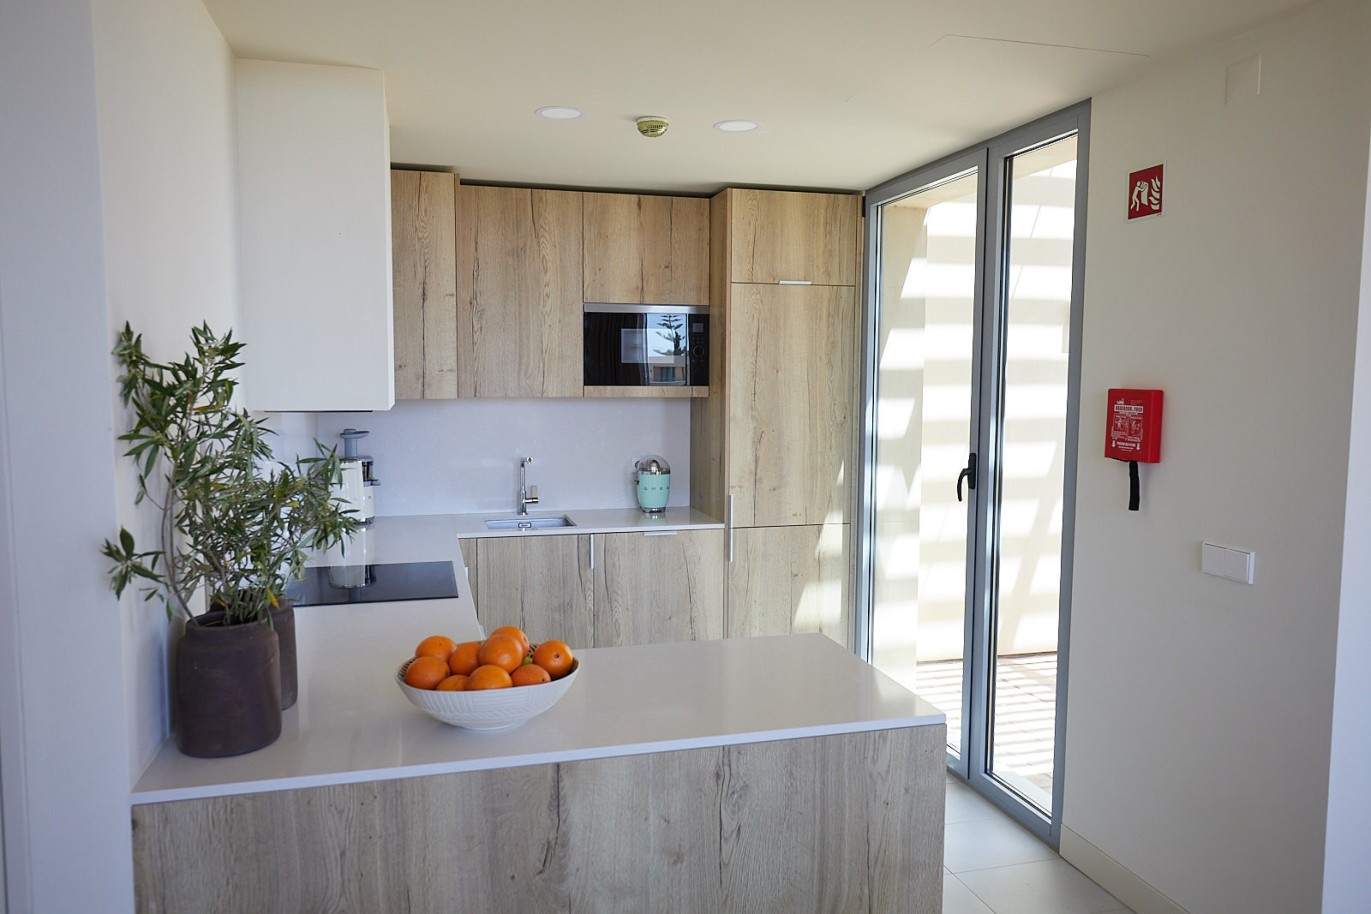 2 bedroom apartment in resort, for sale in Porches, Algarve_230578